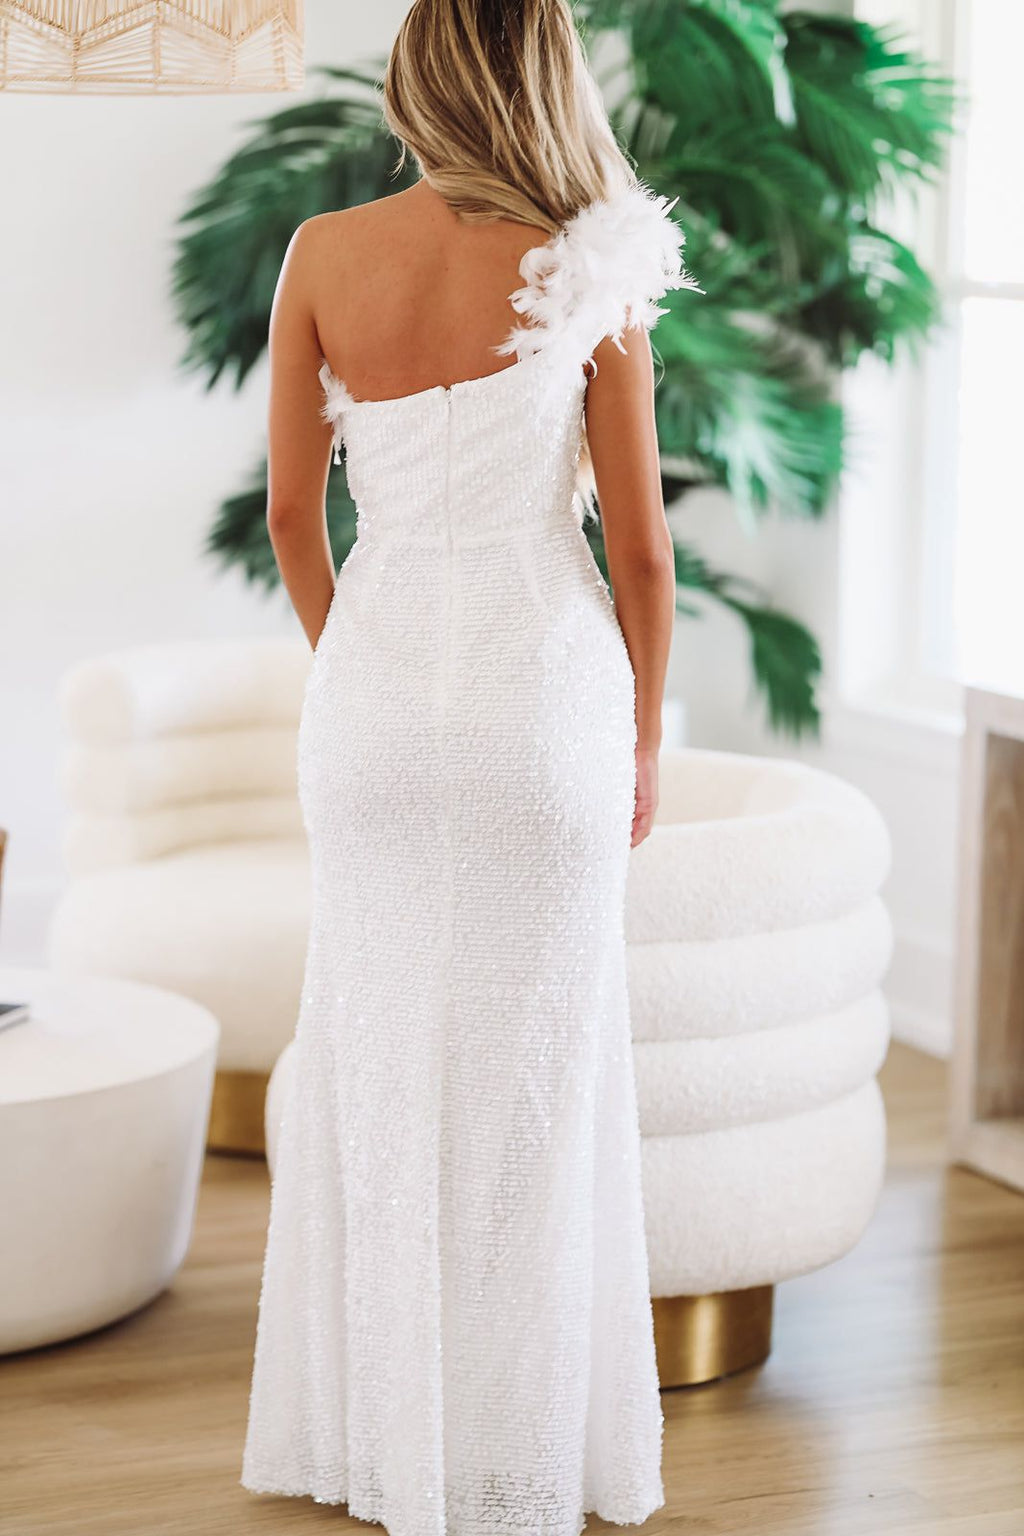 HAZEL & OLIVE Looks Designer Maxi Dress Gown - White